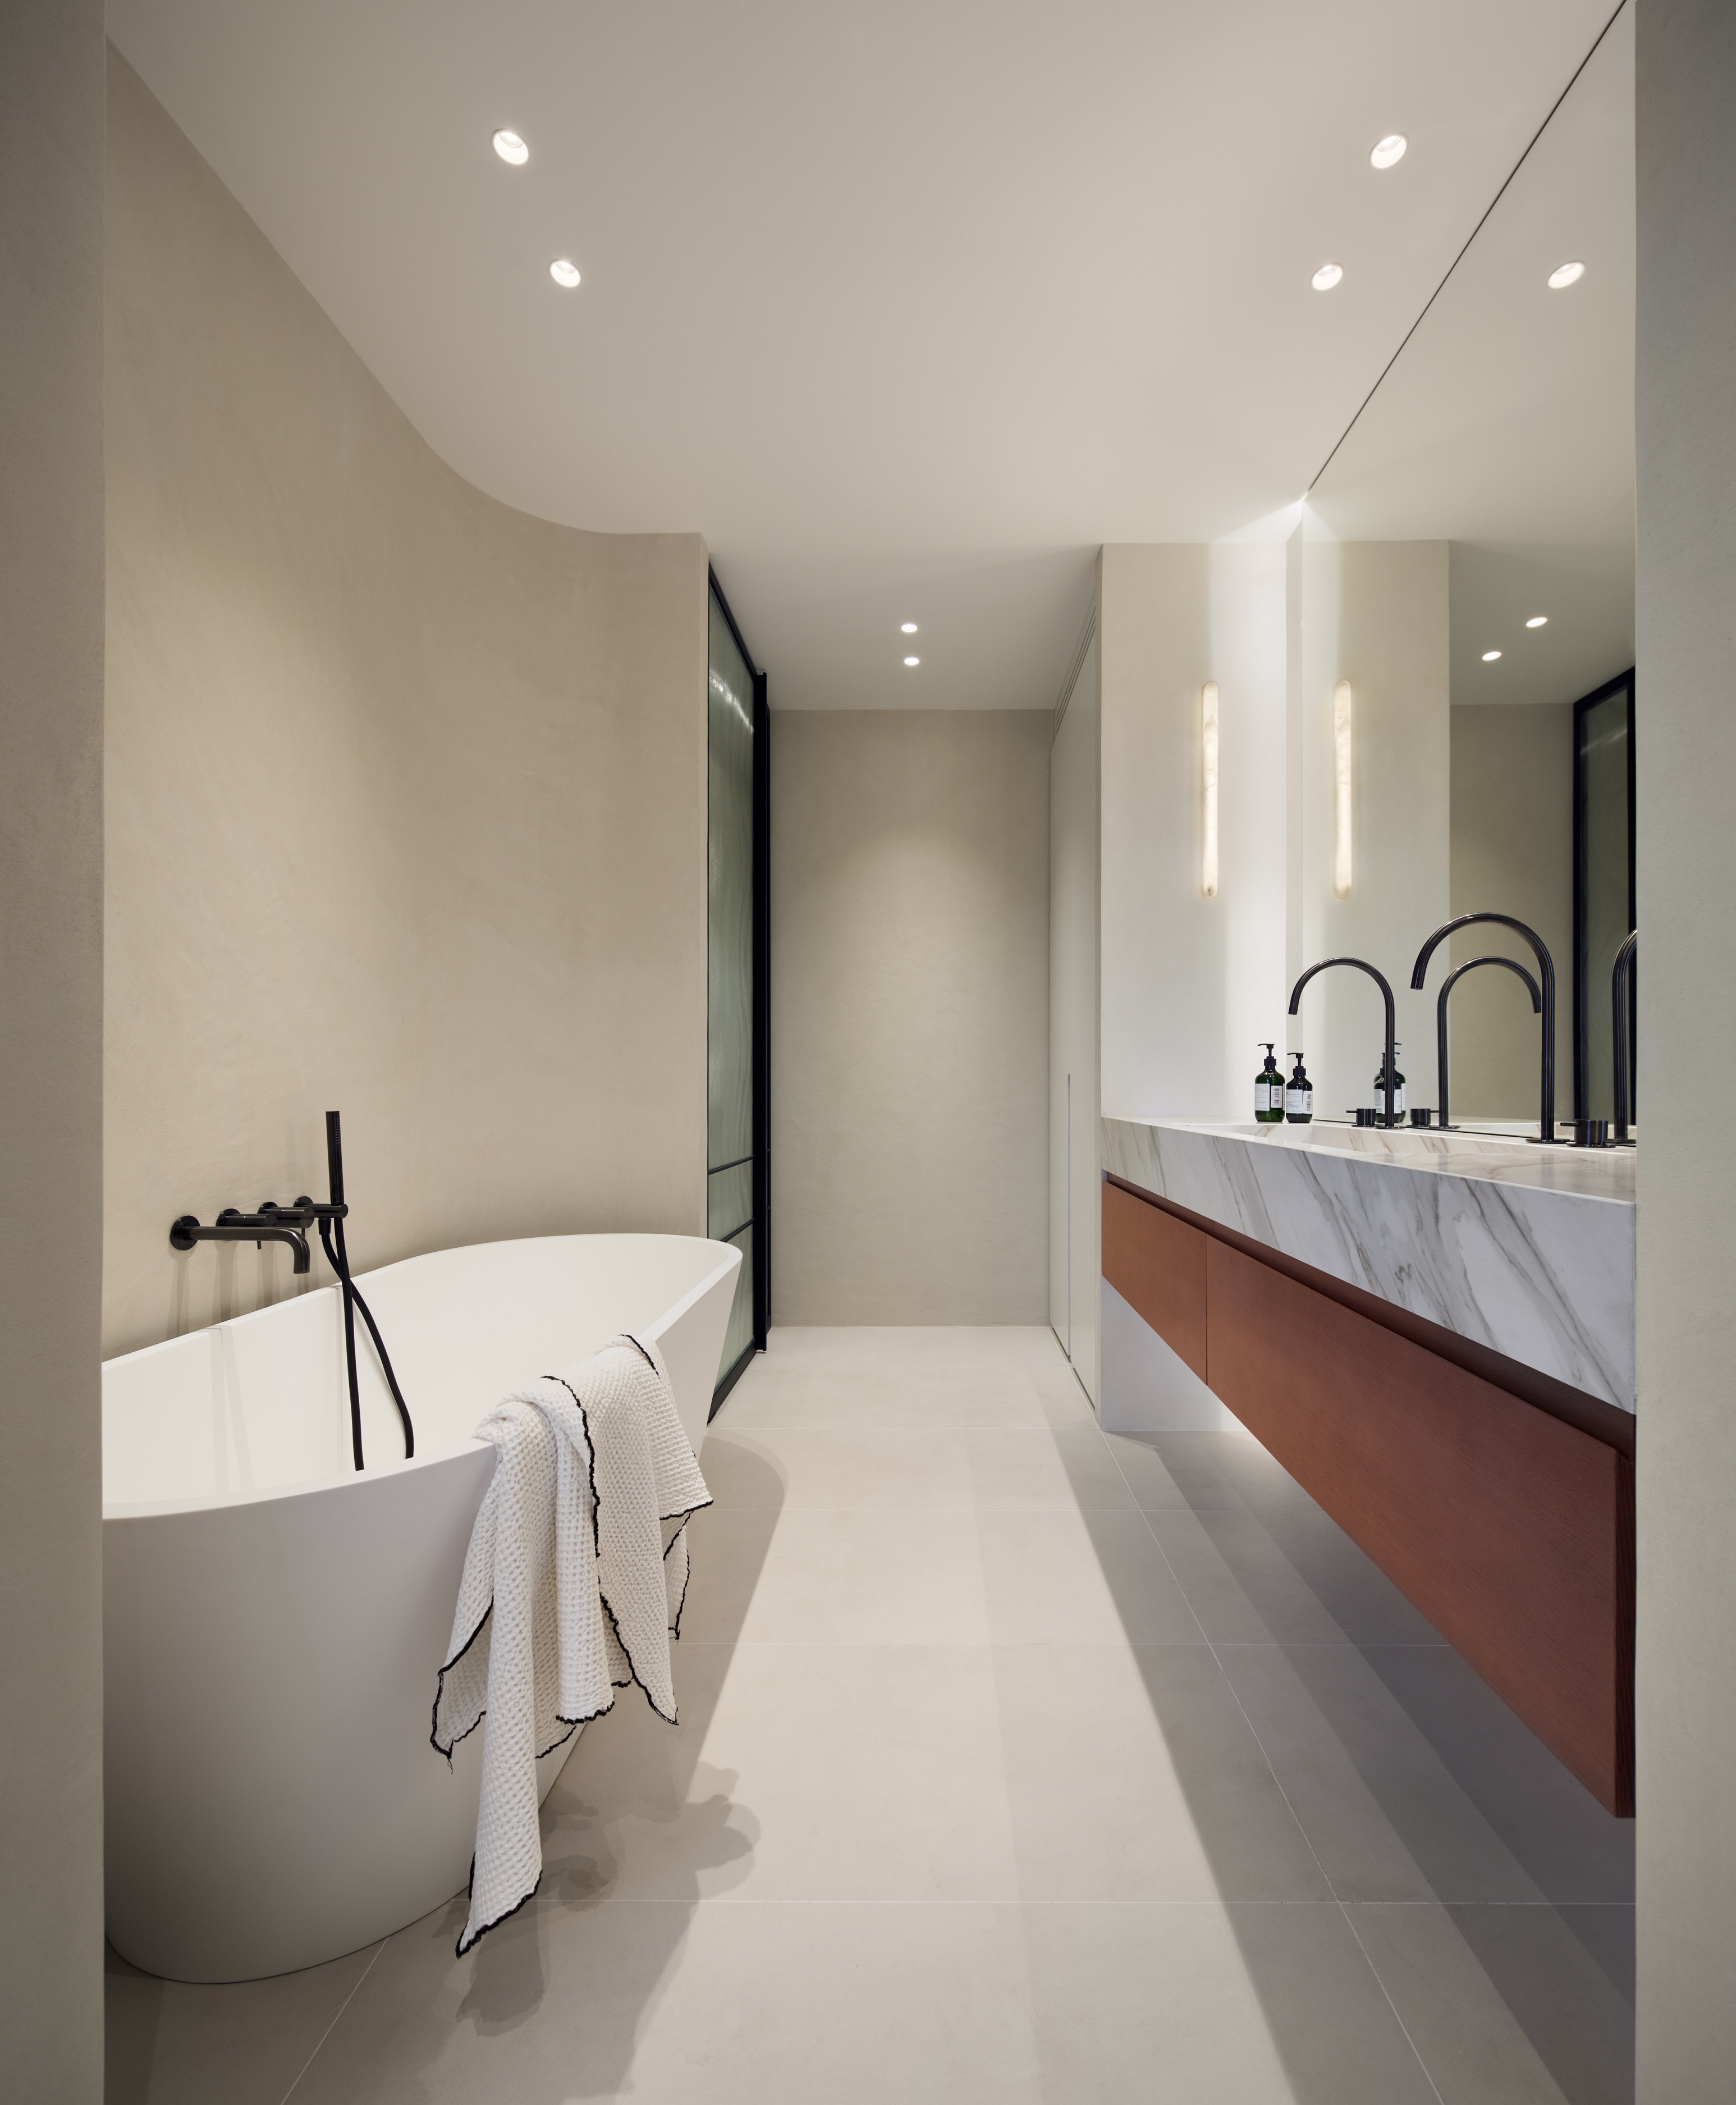 Pedralbes AV. Penthouse LUV Studio Master Bathroom 2 - LUV Studio - Architecture et design - Barcelone